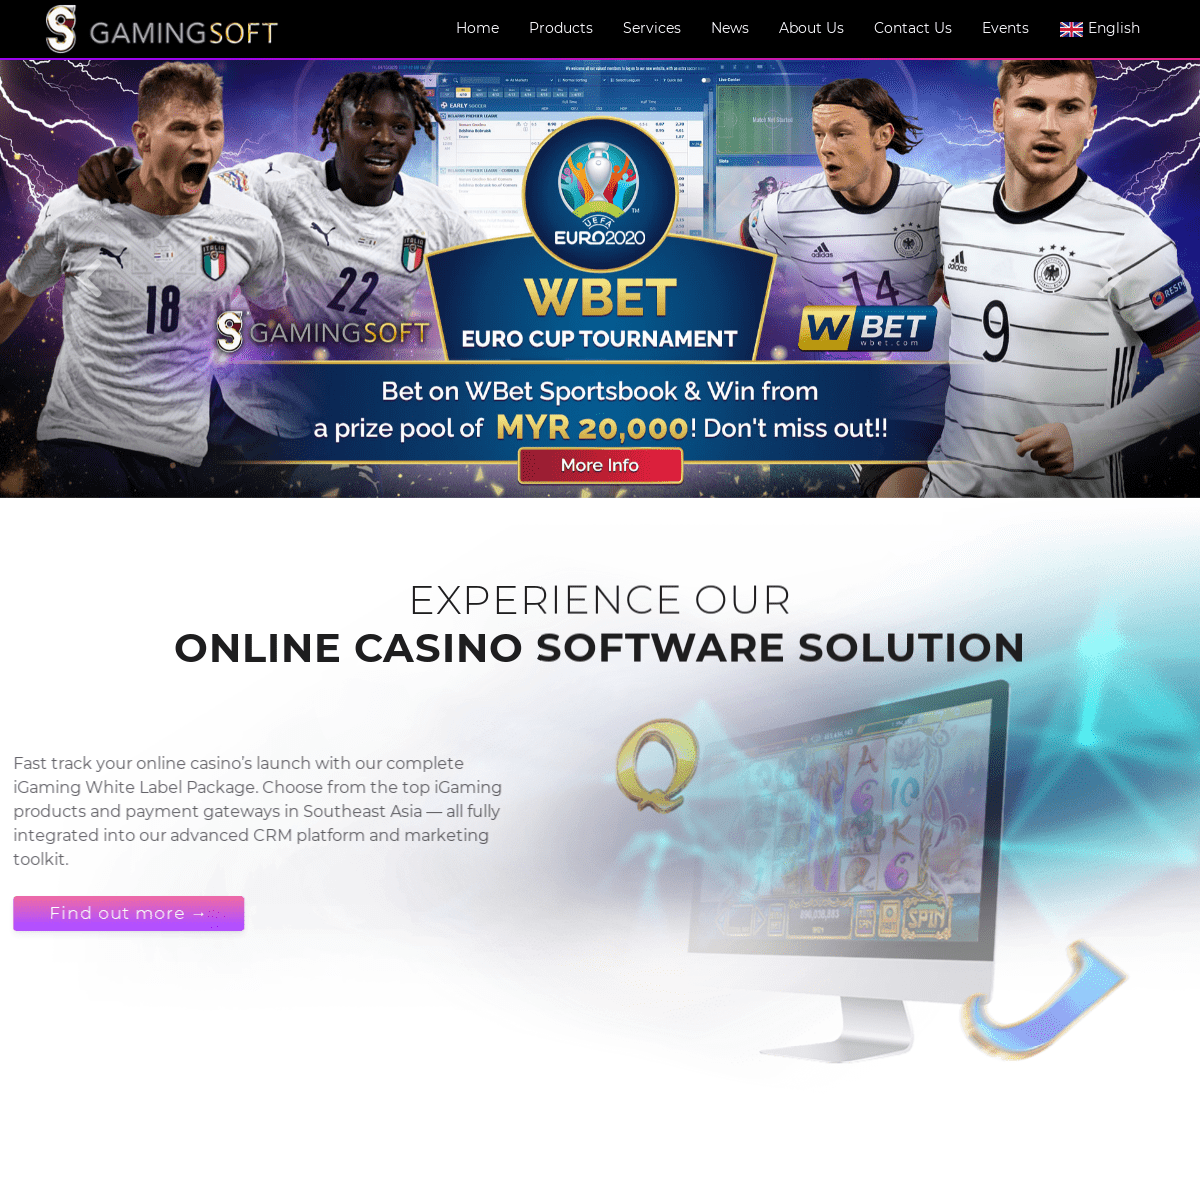 White Label Casino Provider - Casino Software - GamingSoft